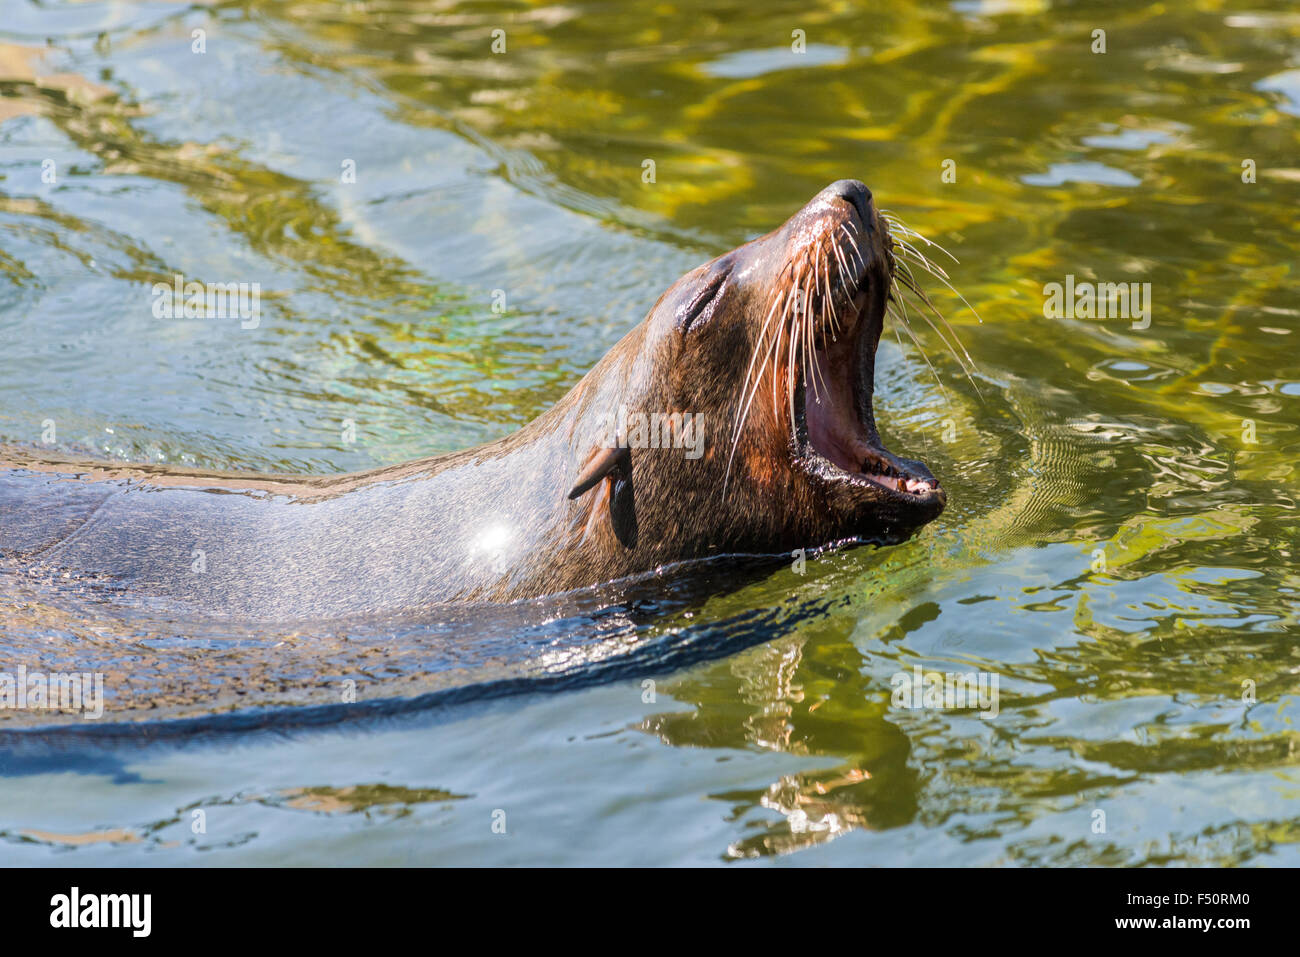 Un sudafricano pelliccia sigillo (Arctocephalus pusillus pusillus), piscina in acqua con la bocca aperta Foto Stock